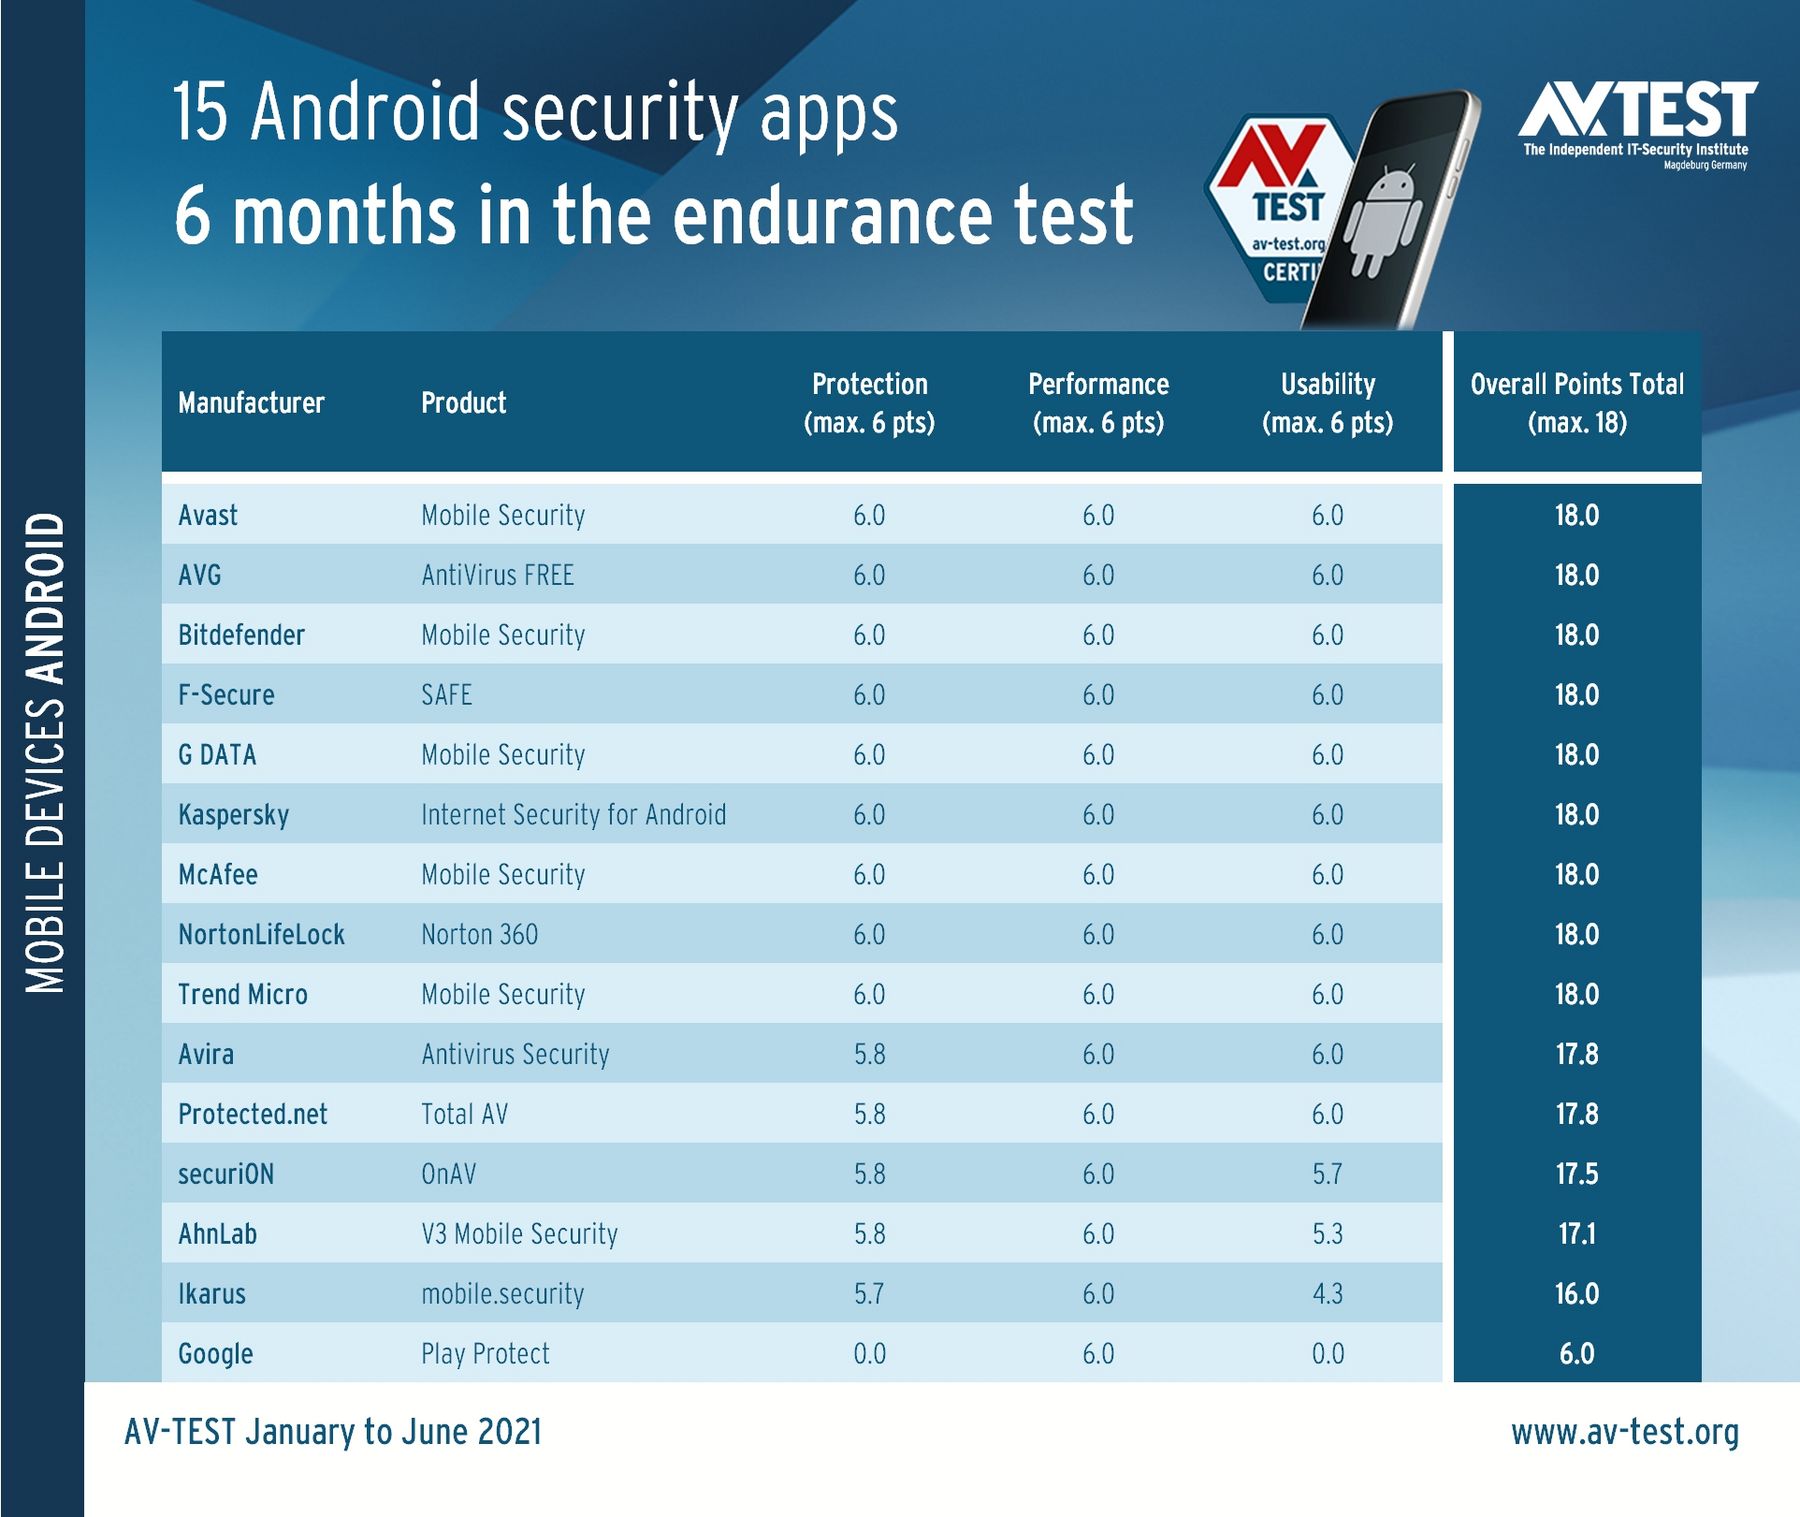 Google Play Protect 在安全测试中得到 0 分，排名垫底